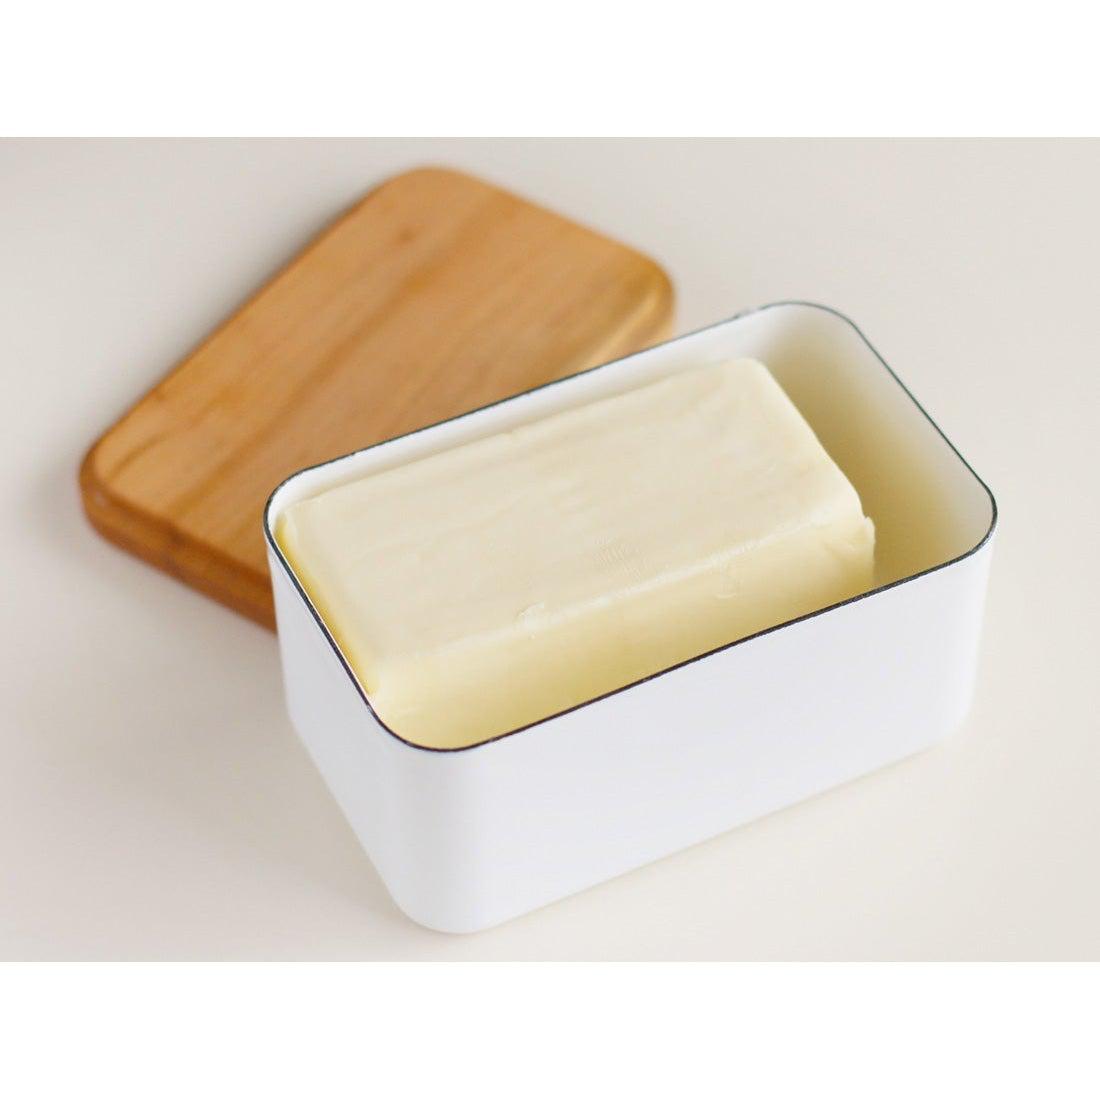 Noda Horo Enamel Butter Dish with Wooden Lid 450g